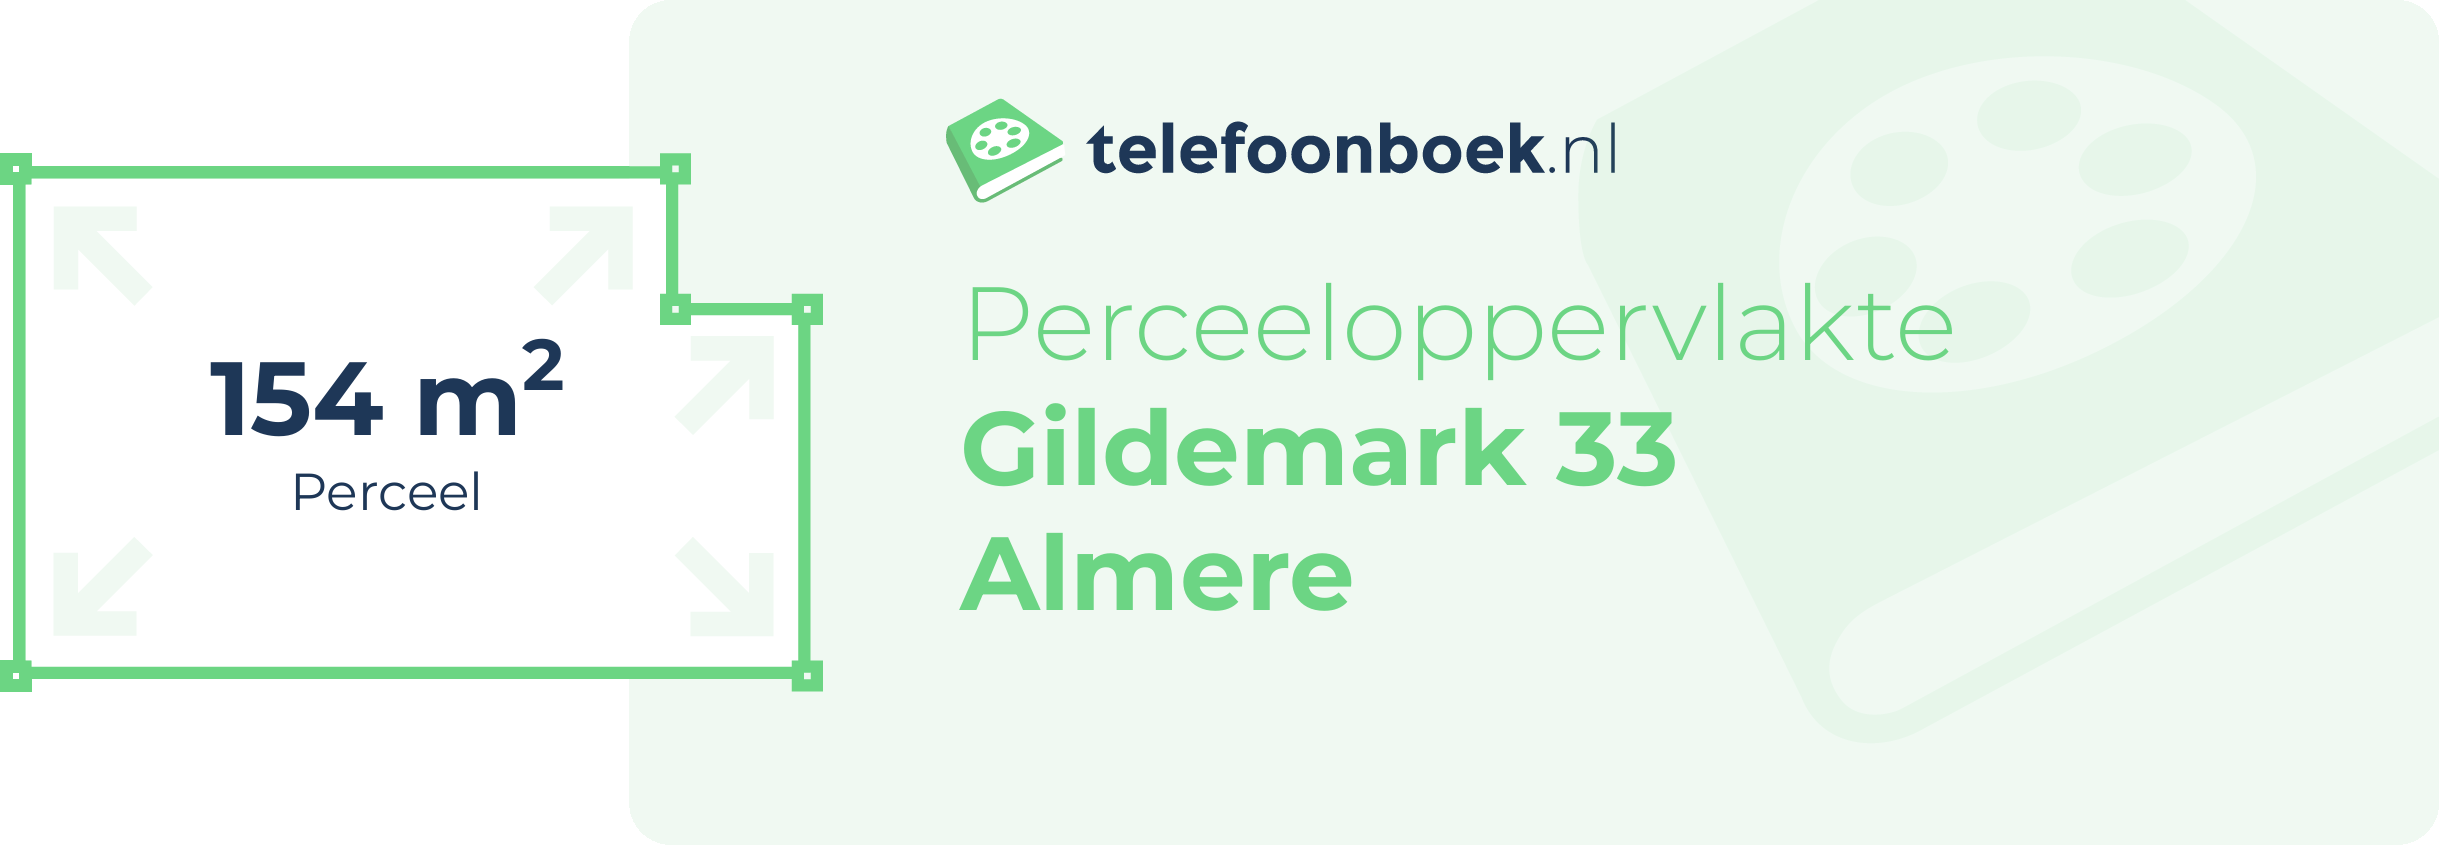 Perceeloppervlakte Gildemark 33 Almere